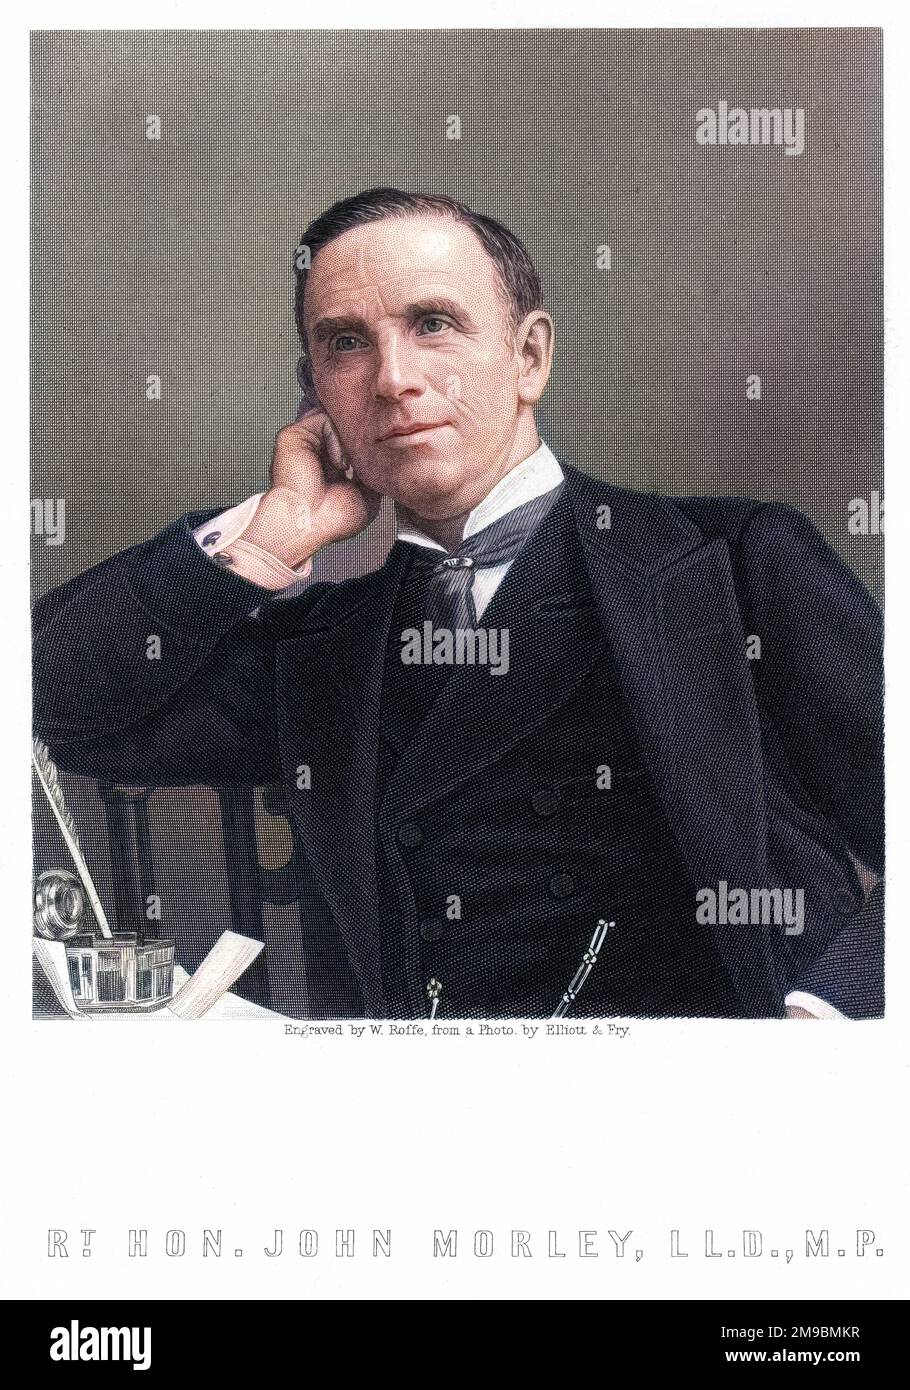 John Viscount Morley (1838 - 1923), Staatsmann und Historiker, Autor mehrerer historischer Biografien, insbesondere Gladstone. Stockfoto